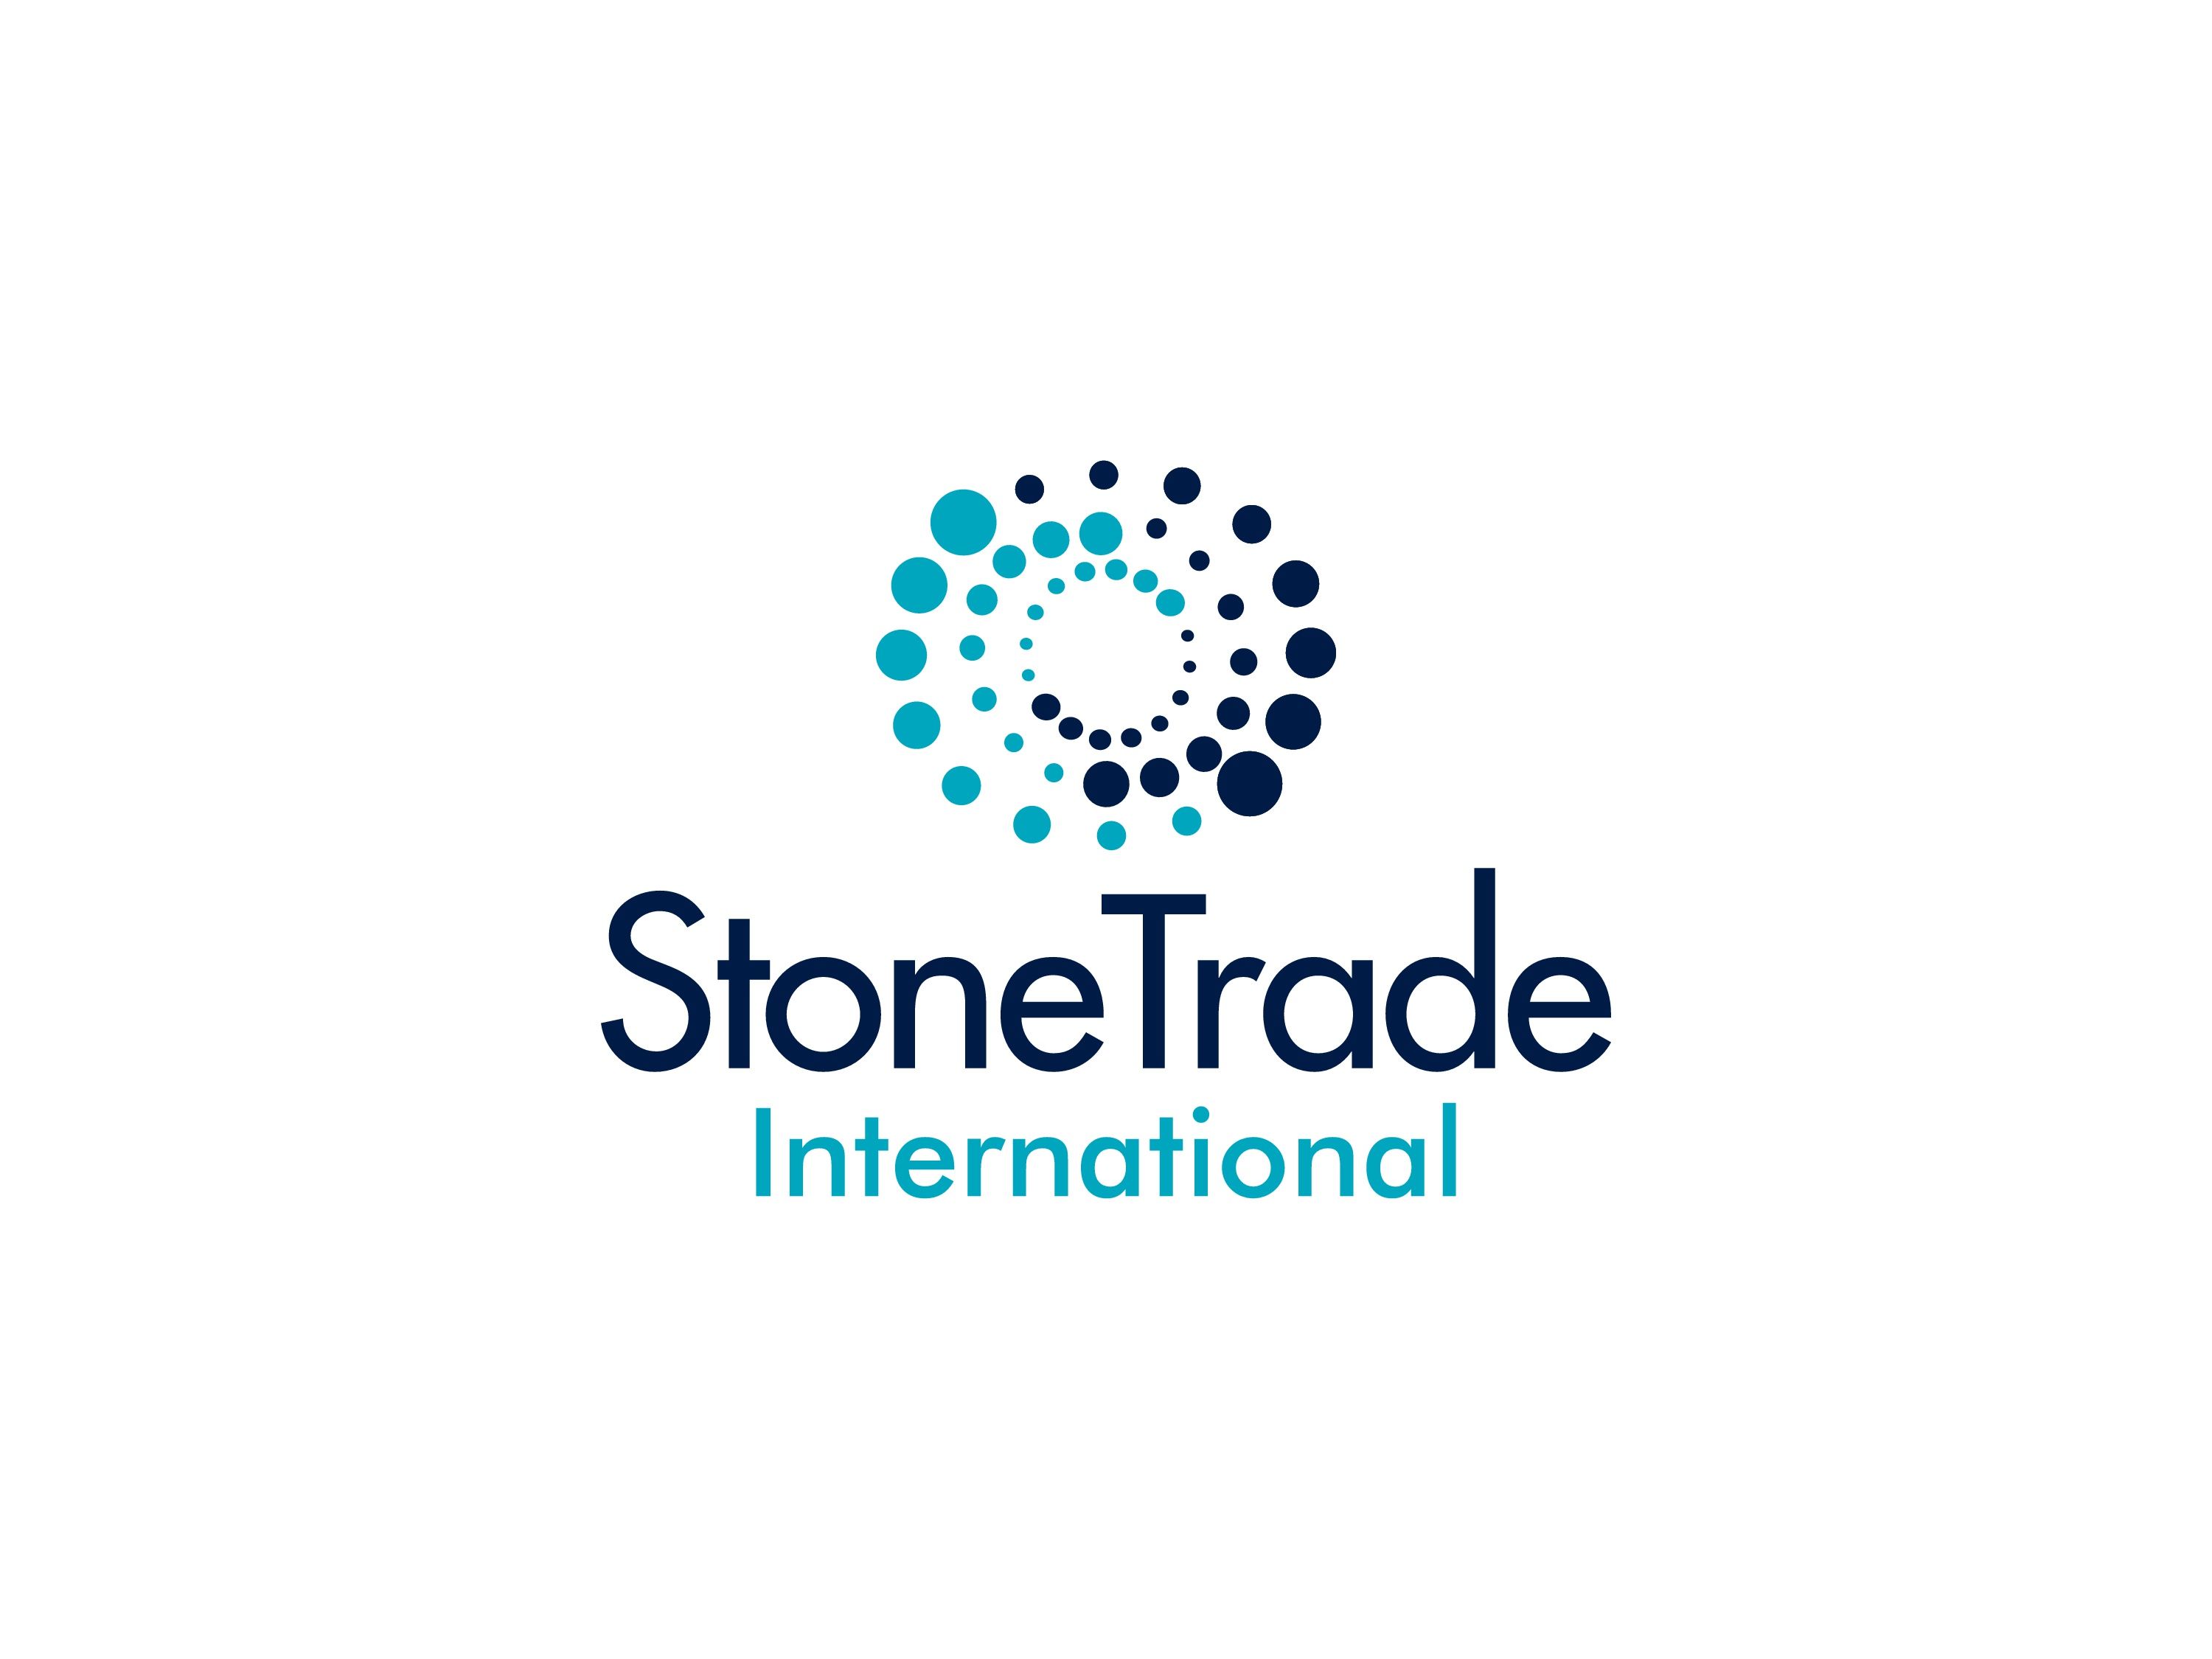 Stone Trade International